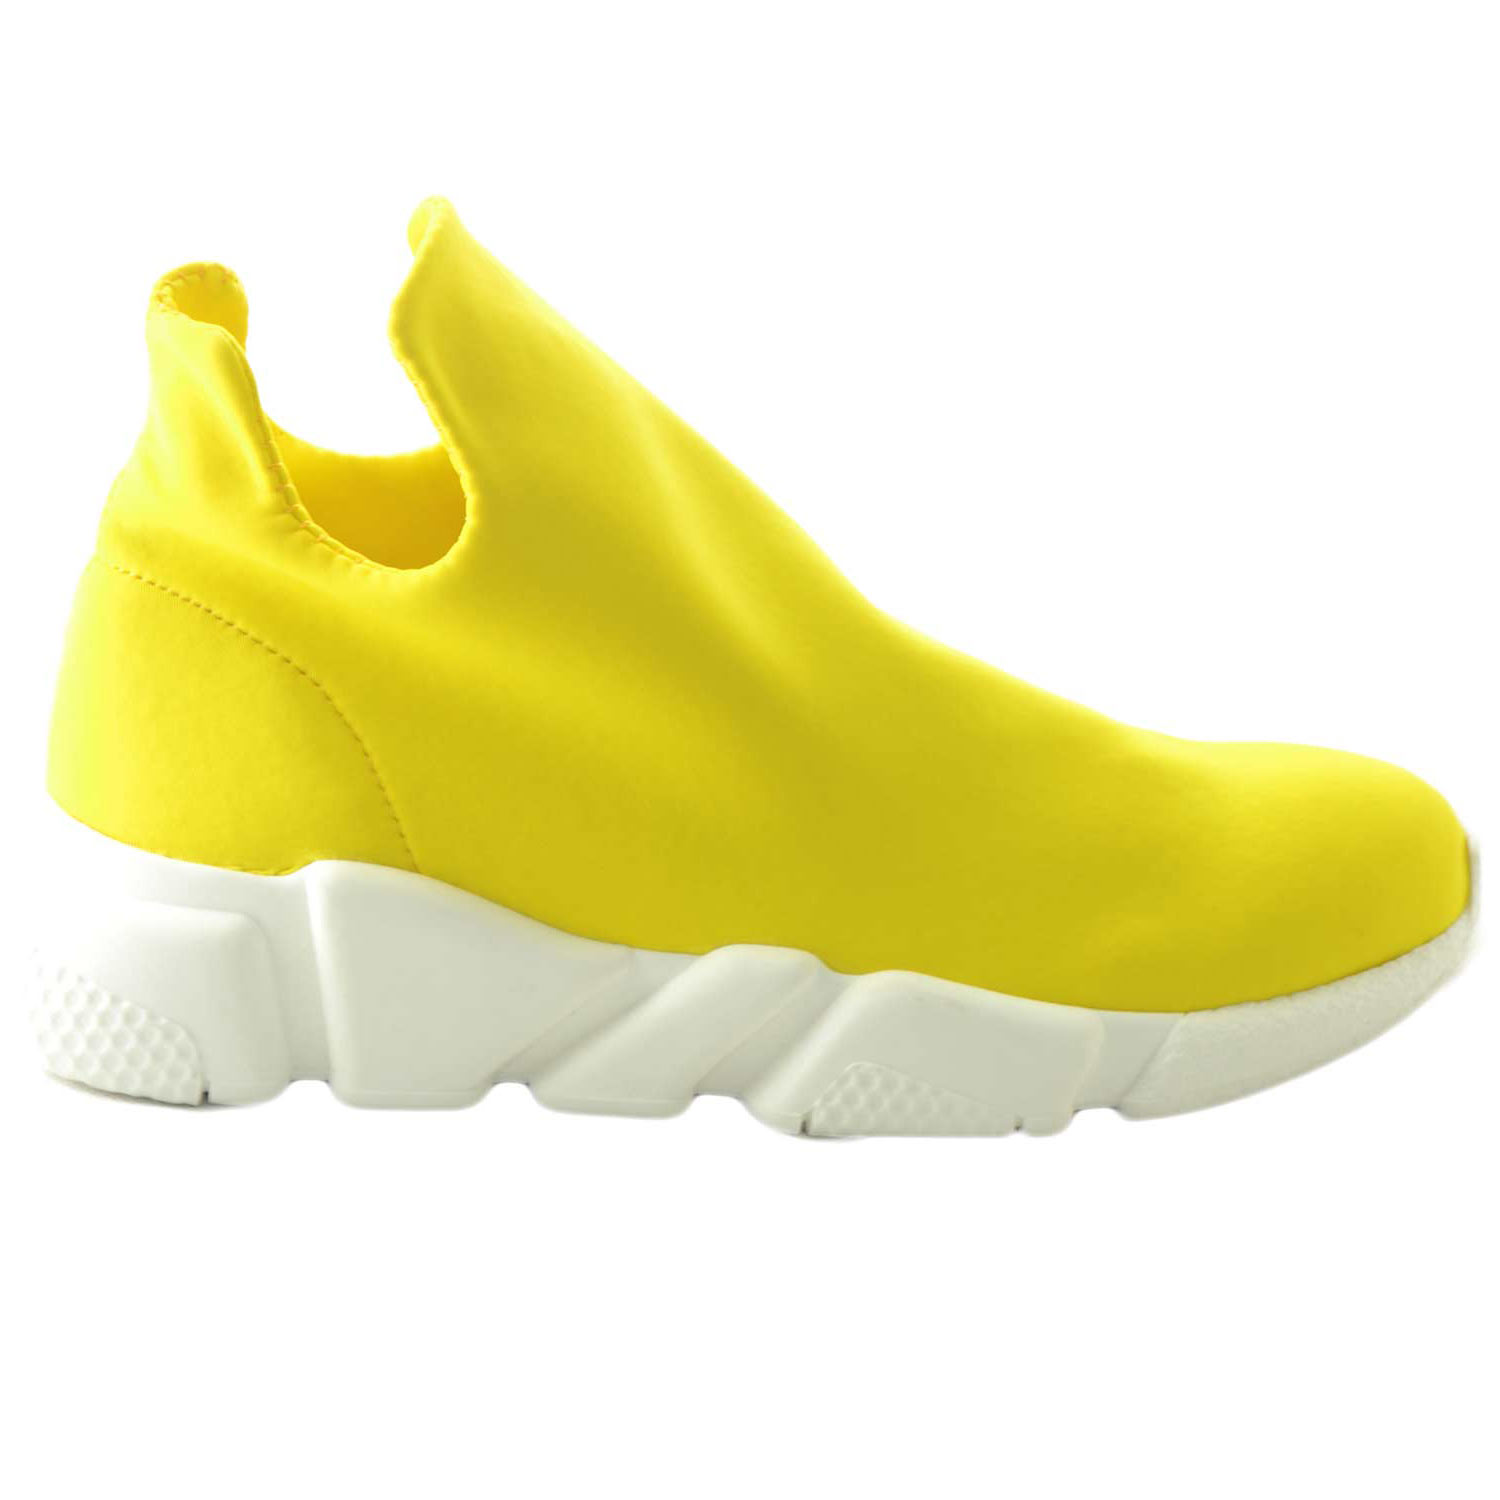 Scarpe uomo sneakers bassa calzino tessuto lycra giallo made in italy fondo antiscivolo man casual moda giovanile